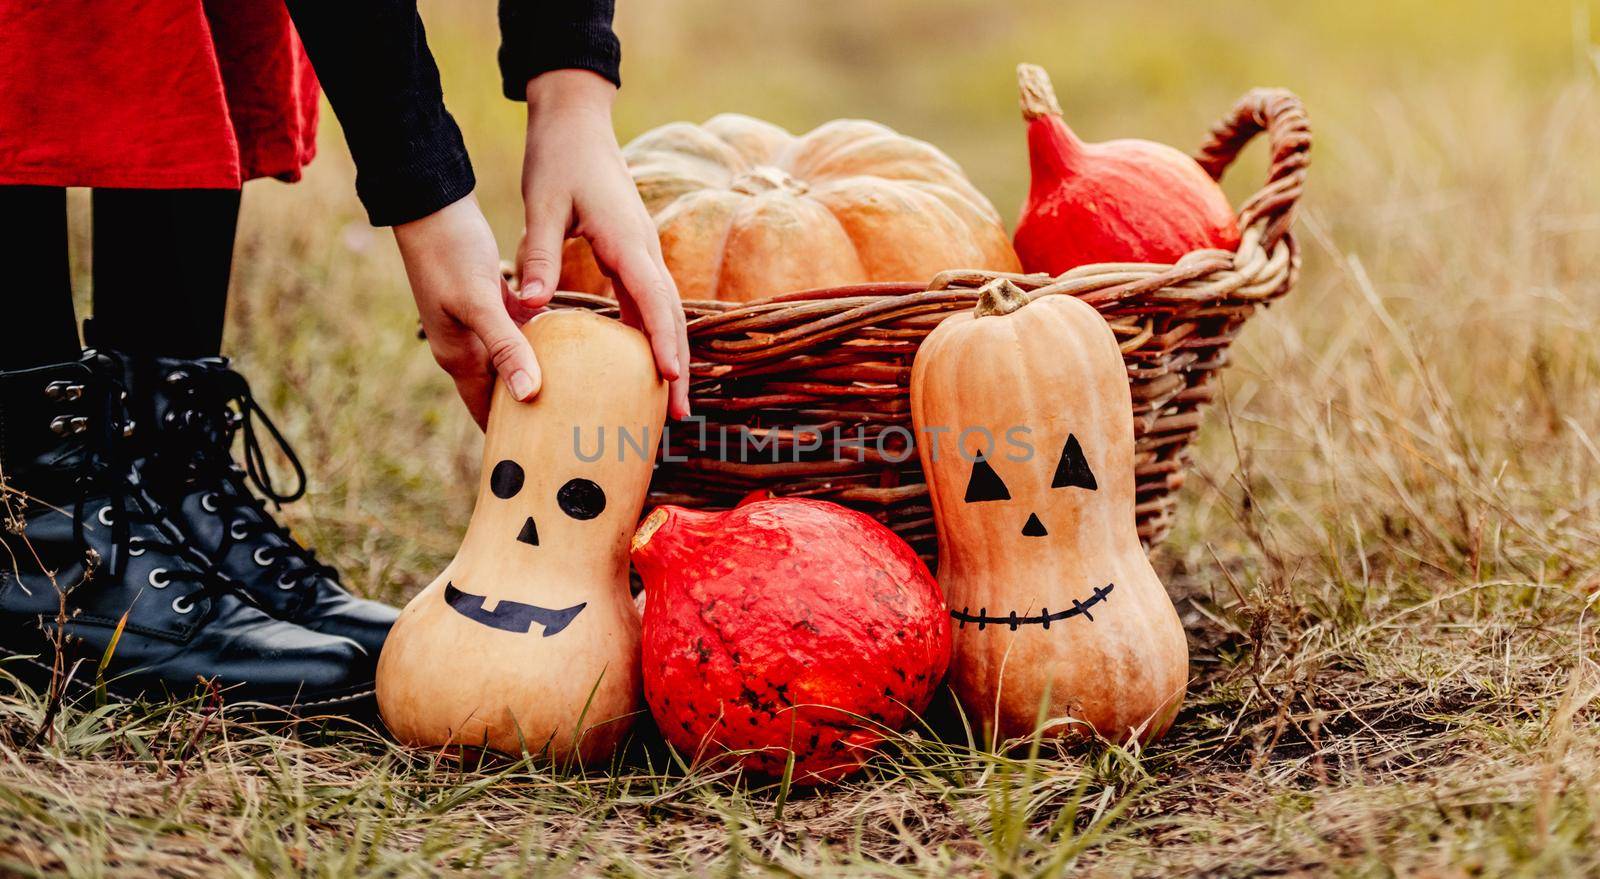 Halloween pumpkins and basket standing at girls feet on autumn ground